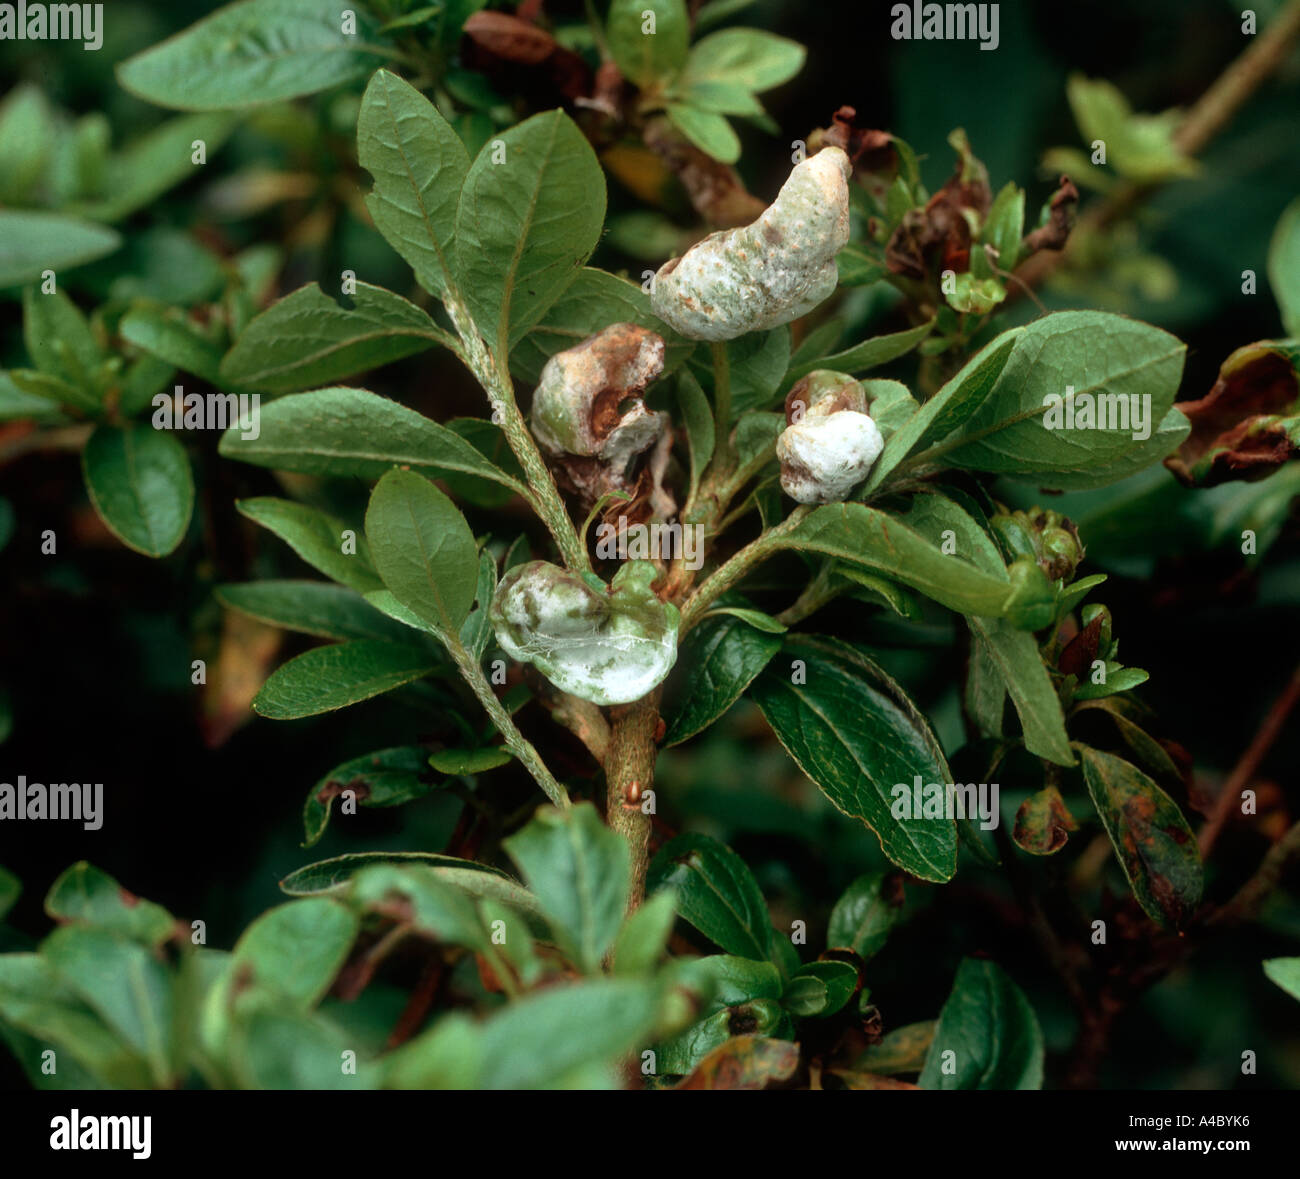 Azalea gall Exobasidium vaccini distorting the leaves of an azalea shrub Stock Photo